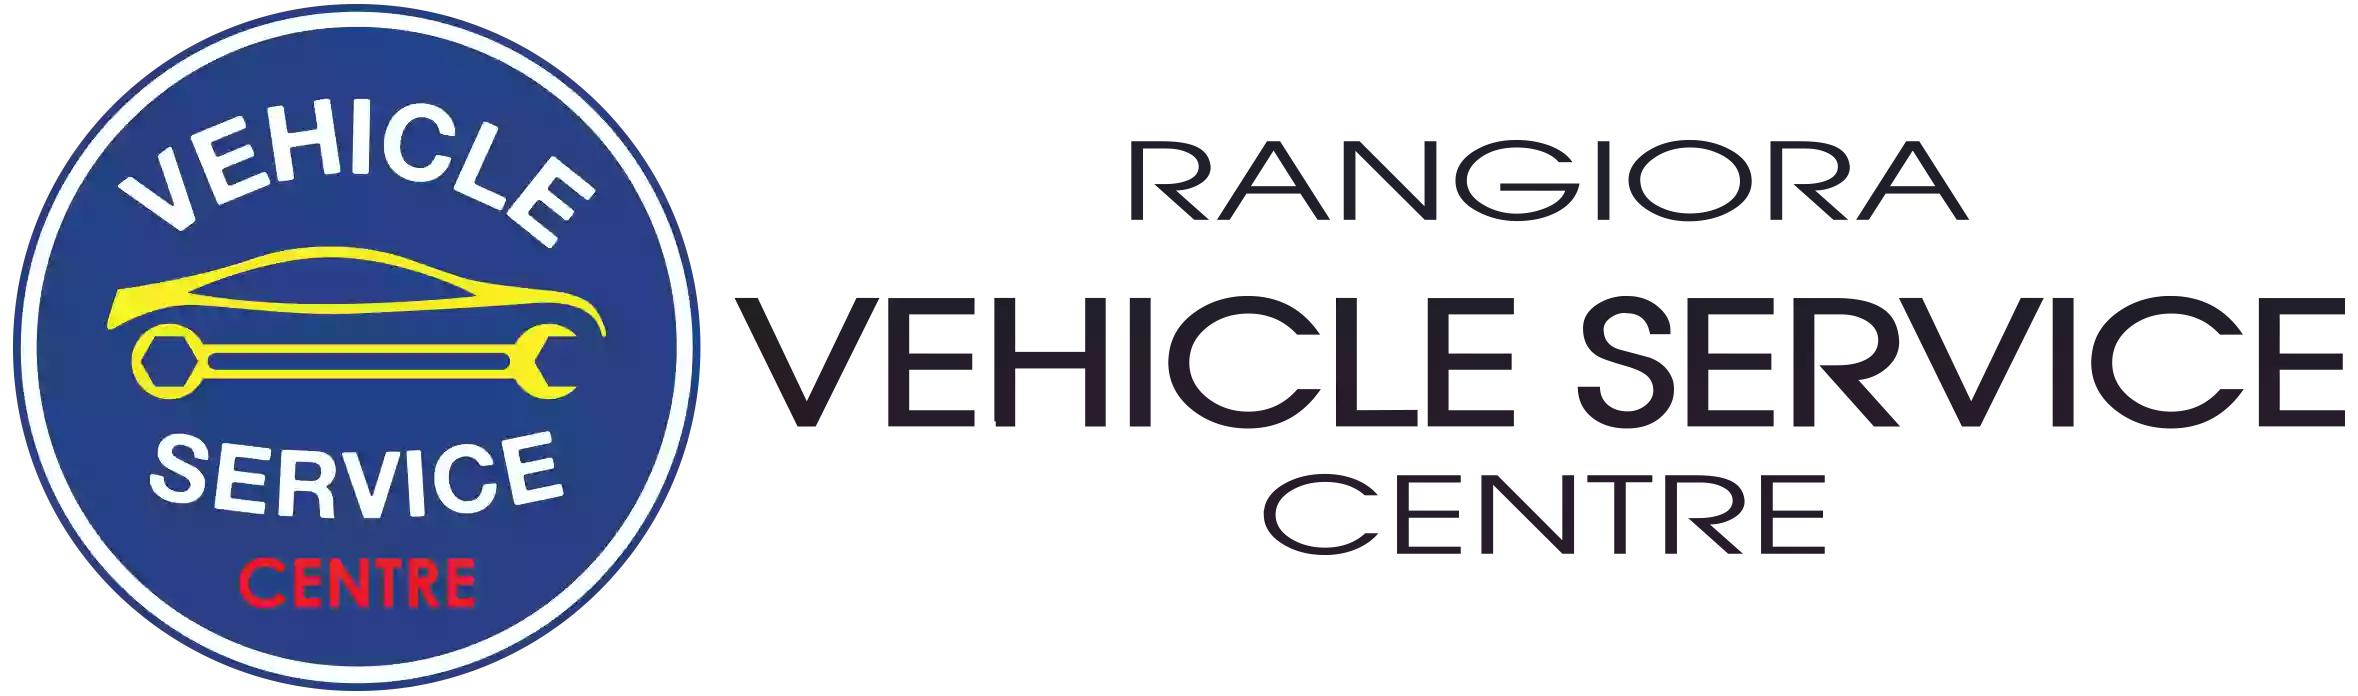 Vehicle Service Centre Rangiora